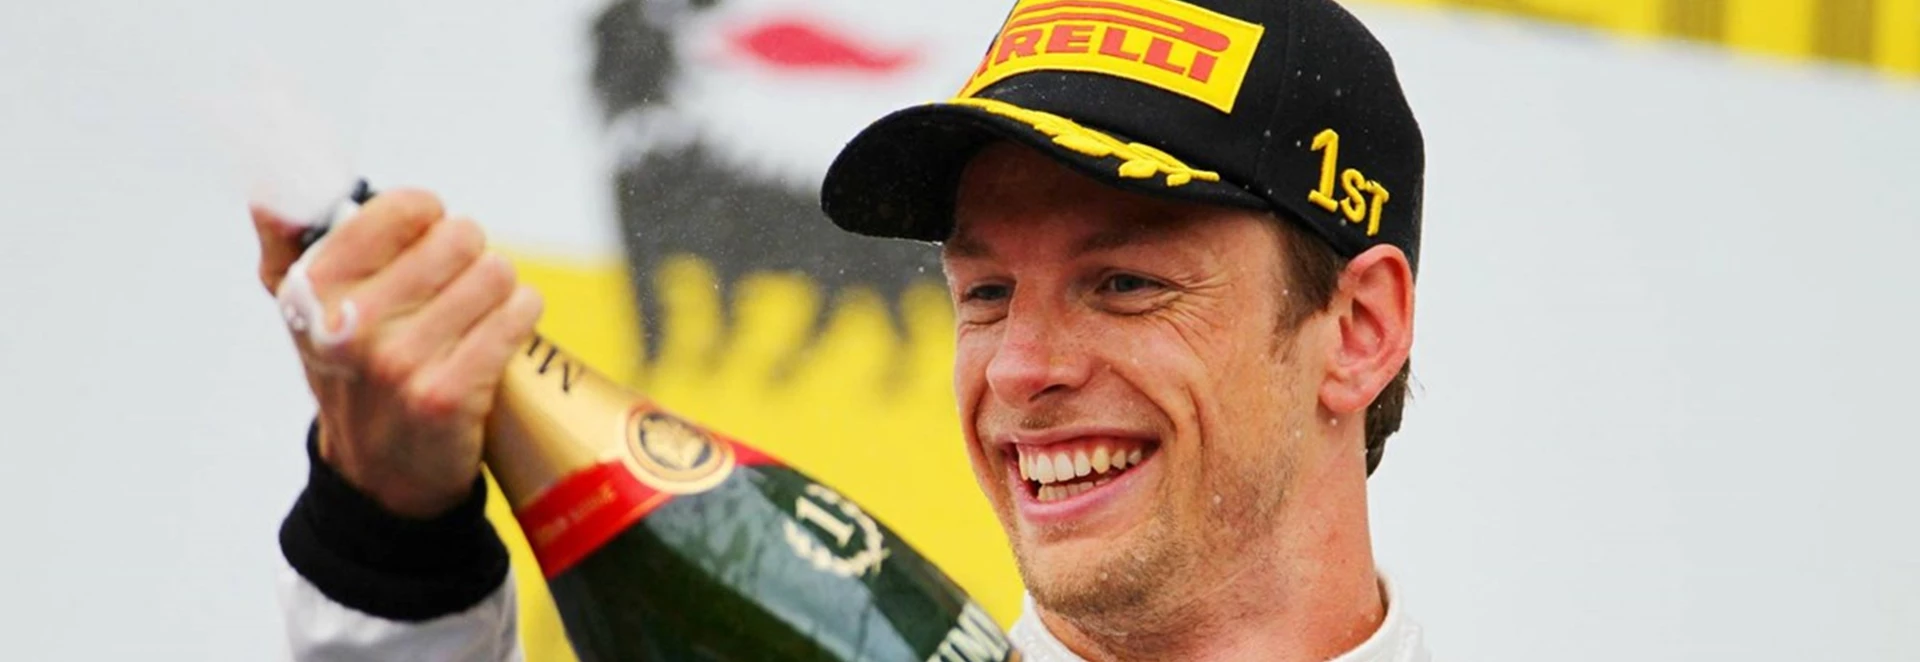 Six of Jenson Button’s best races in Formula 1 